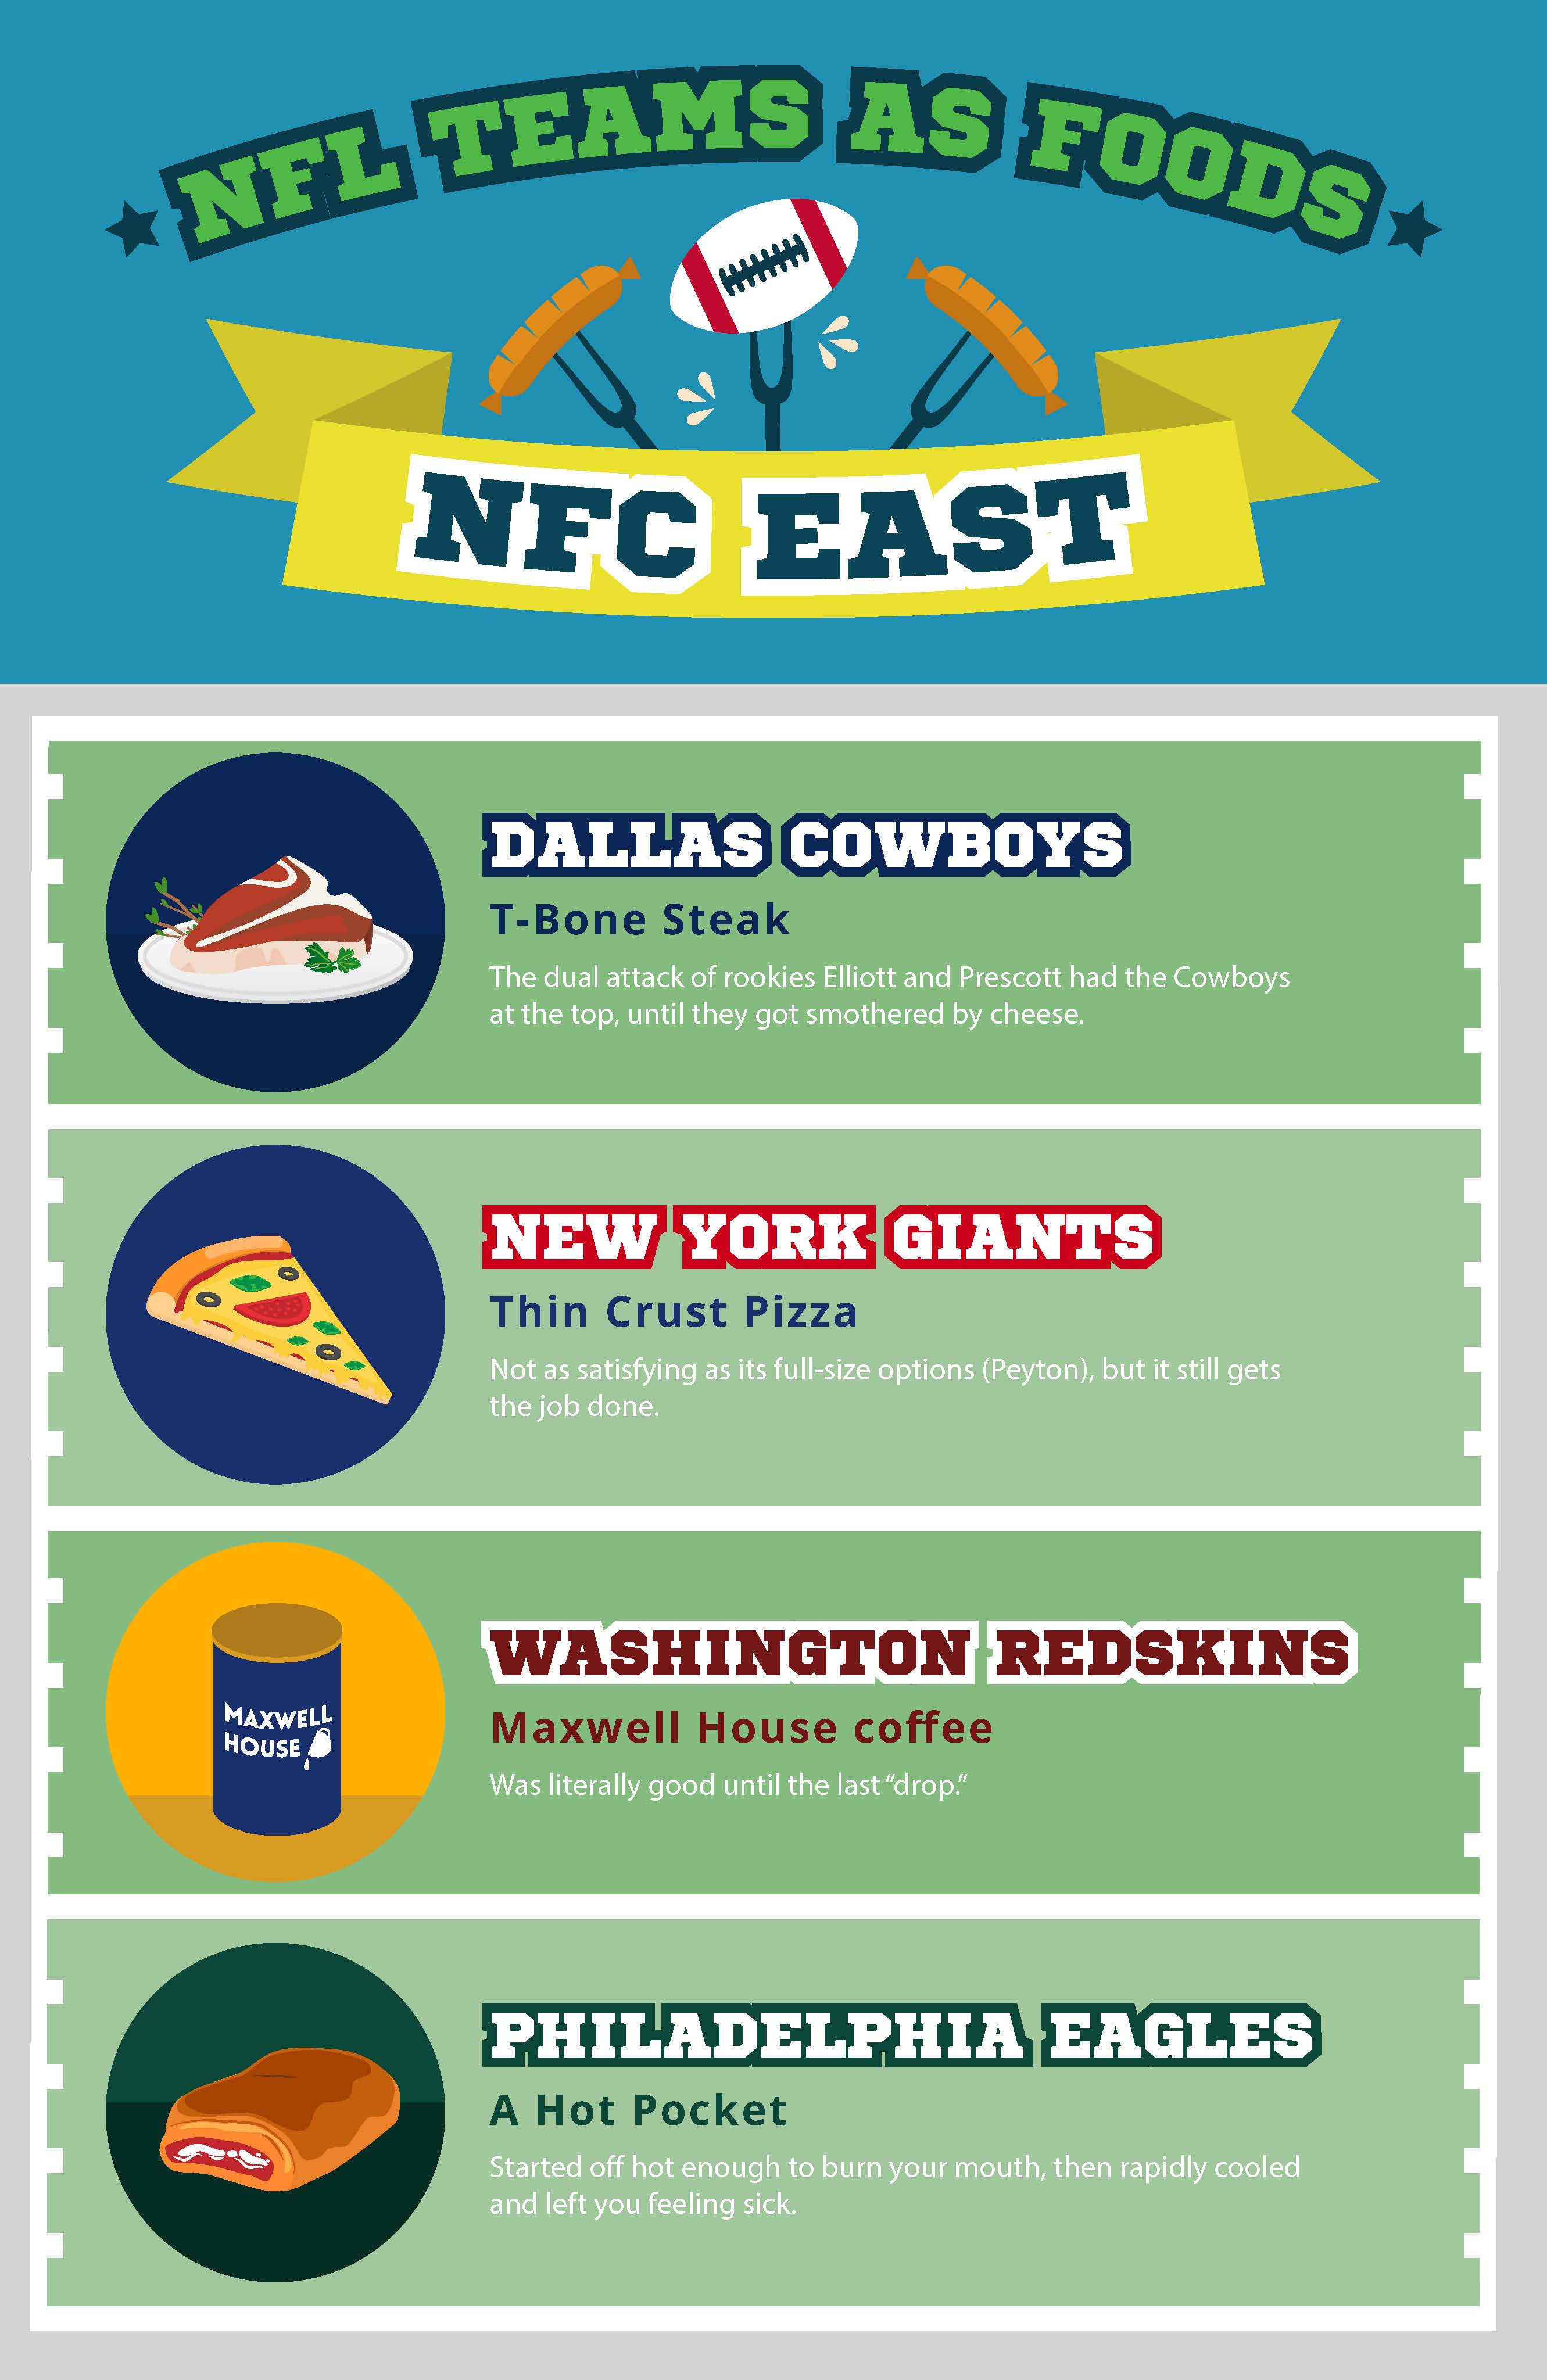 NFL Teams as Food: NFC East